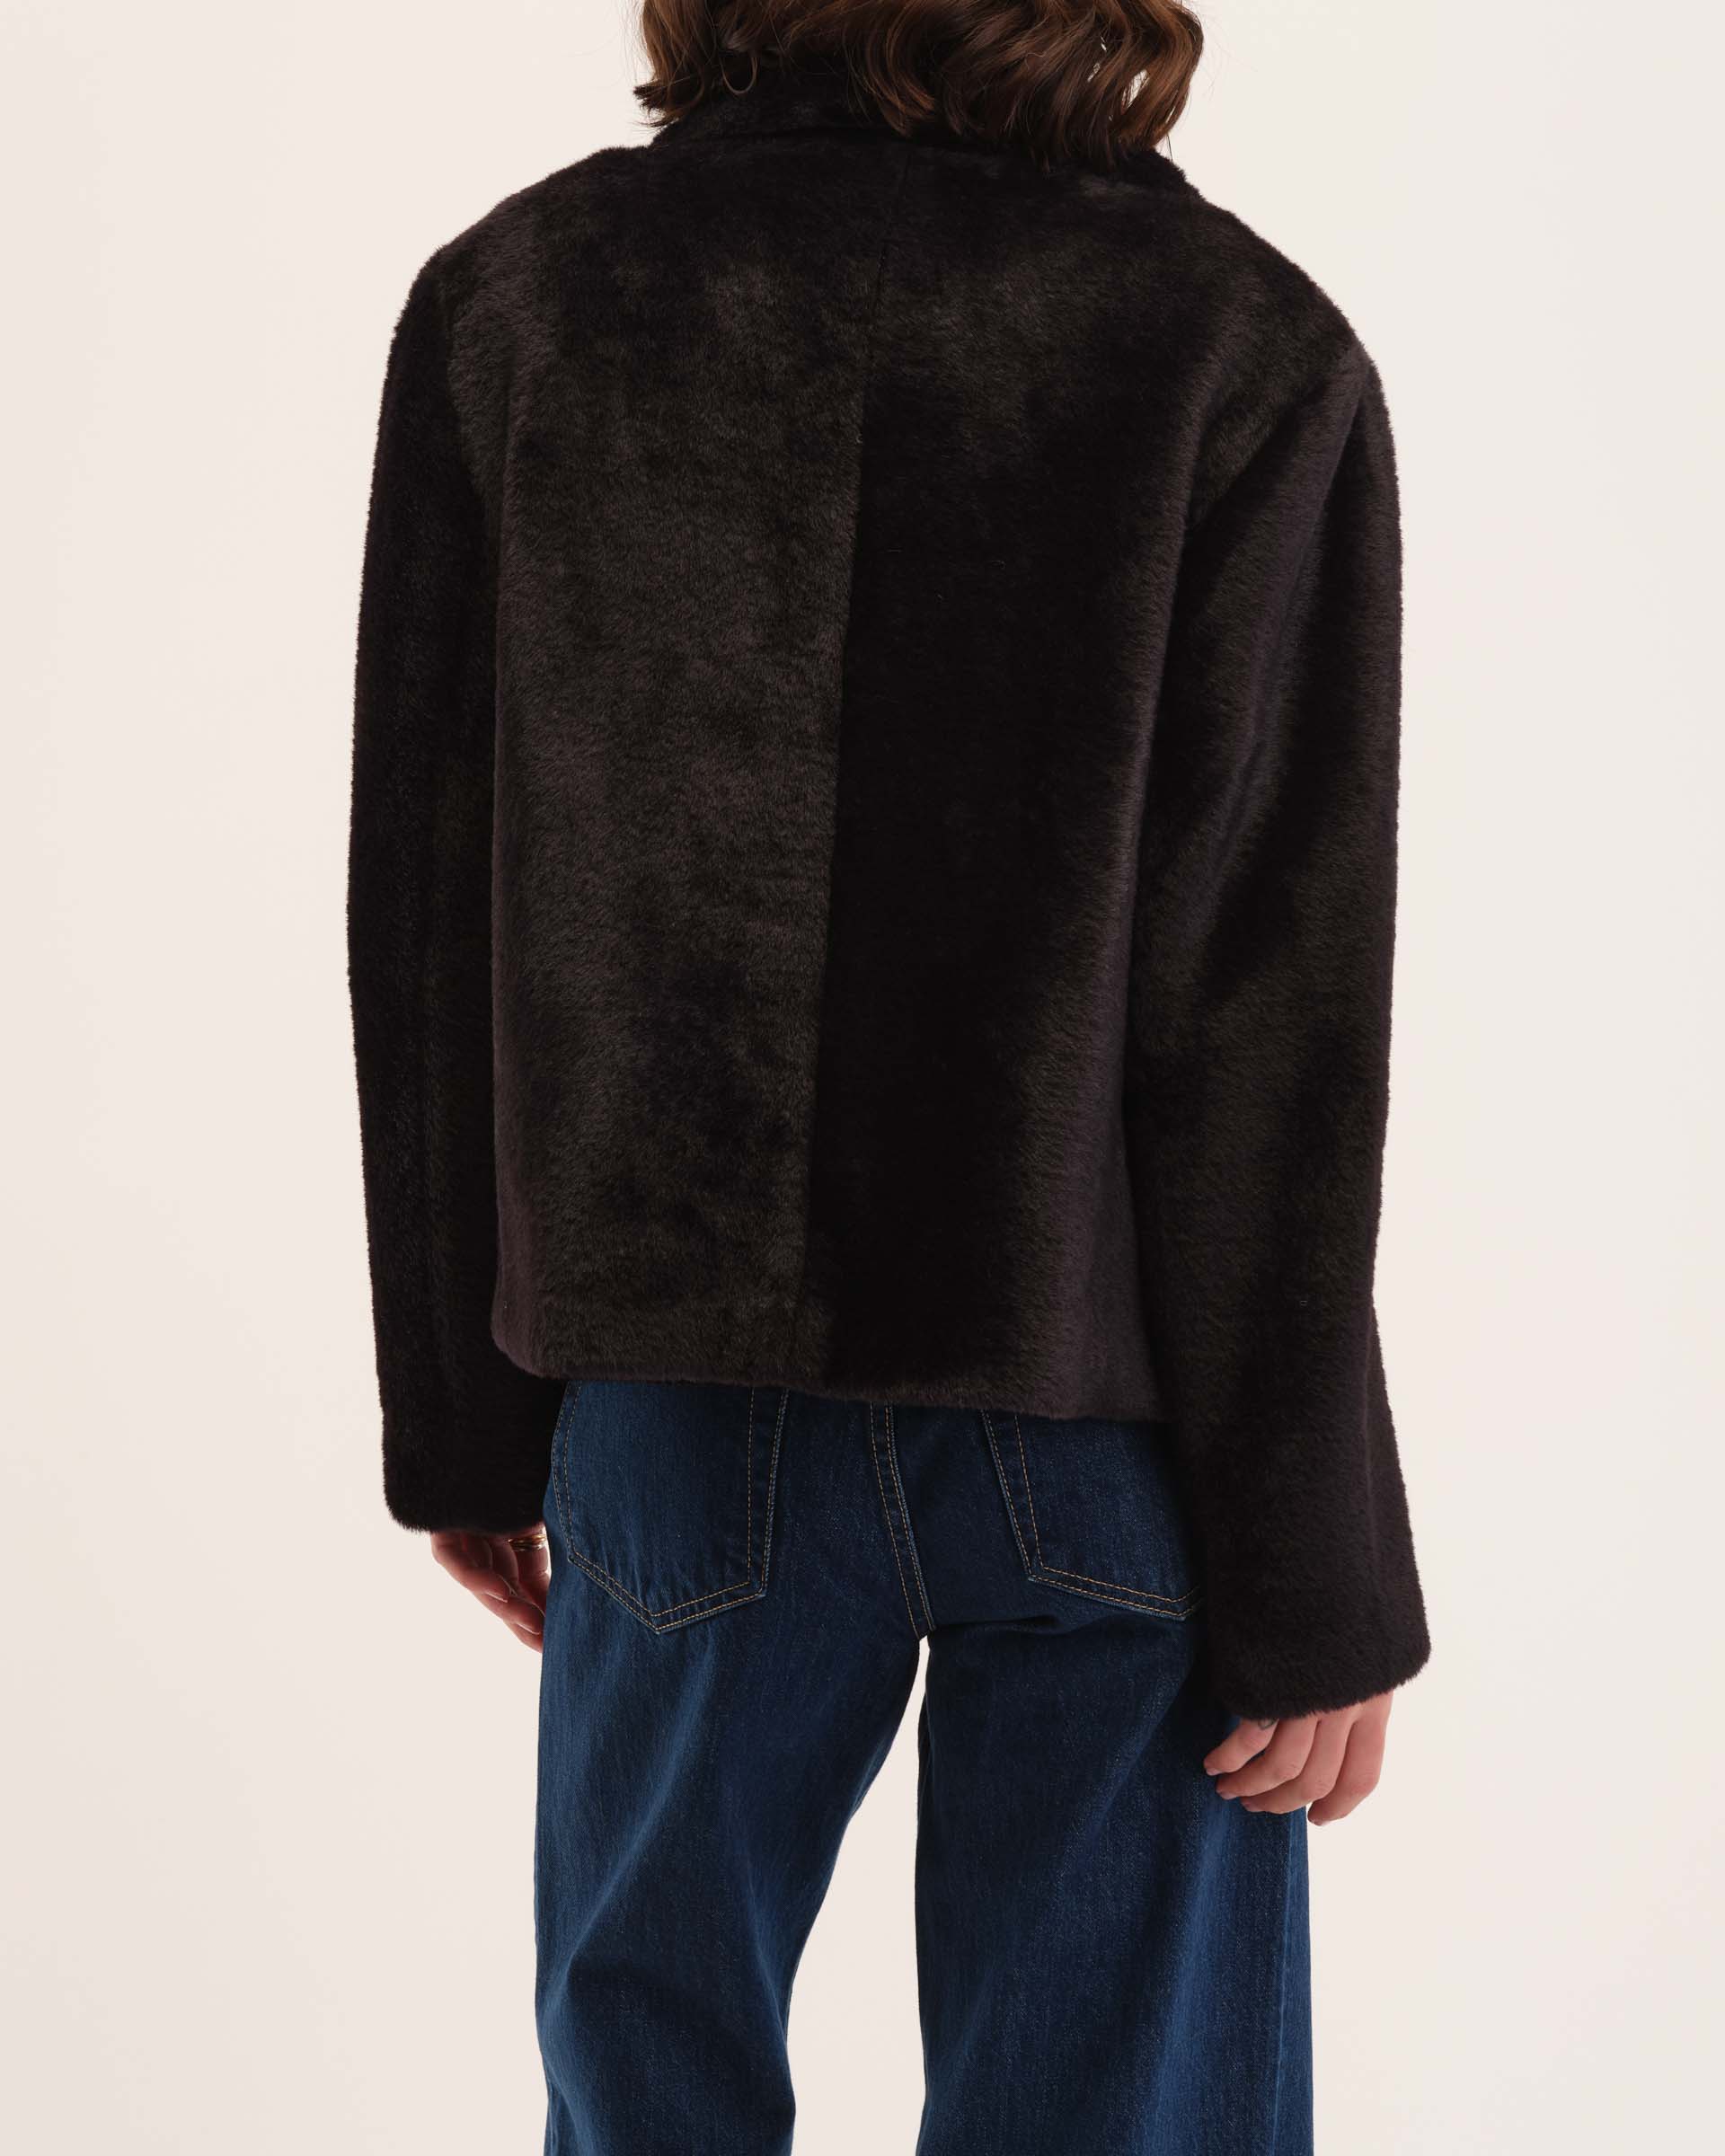 Shop Faux Fur Button Front Collared Jacket | Elie Elie Tahari | JANE + MERCER